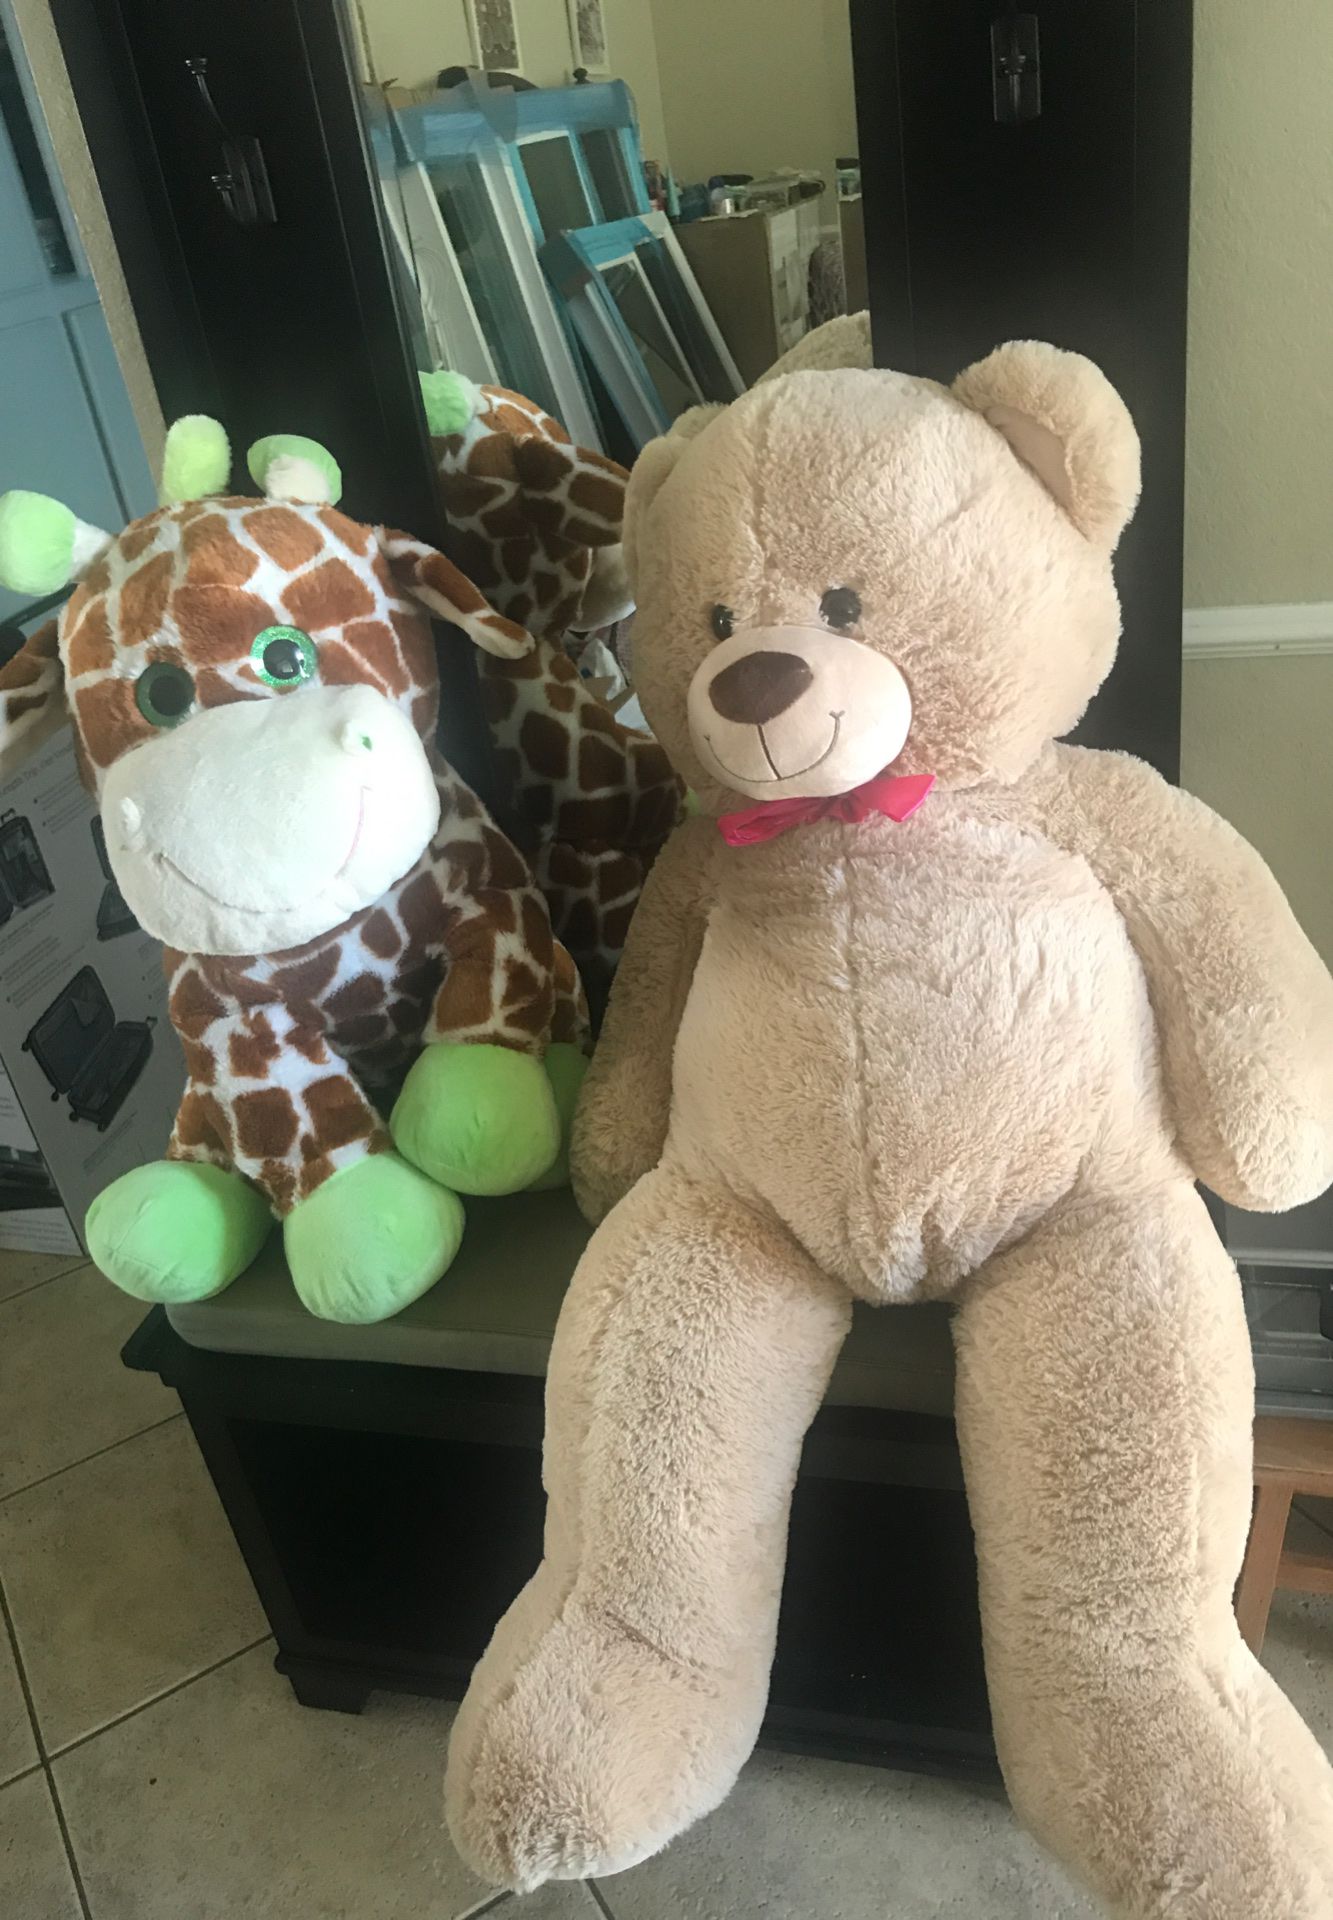 Big teddy bear and giraffe stuffed animals